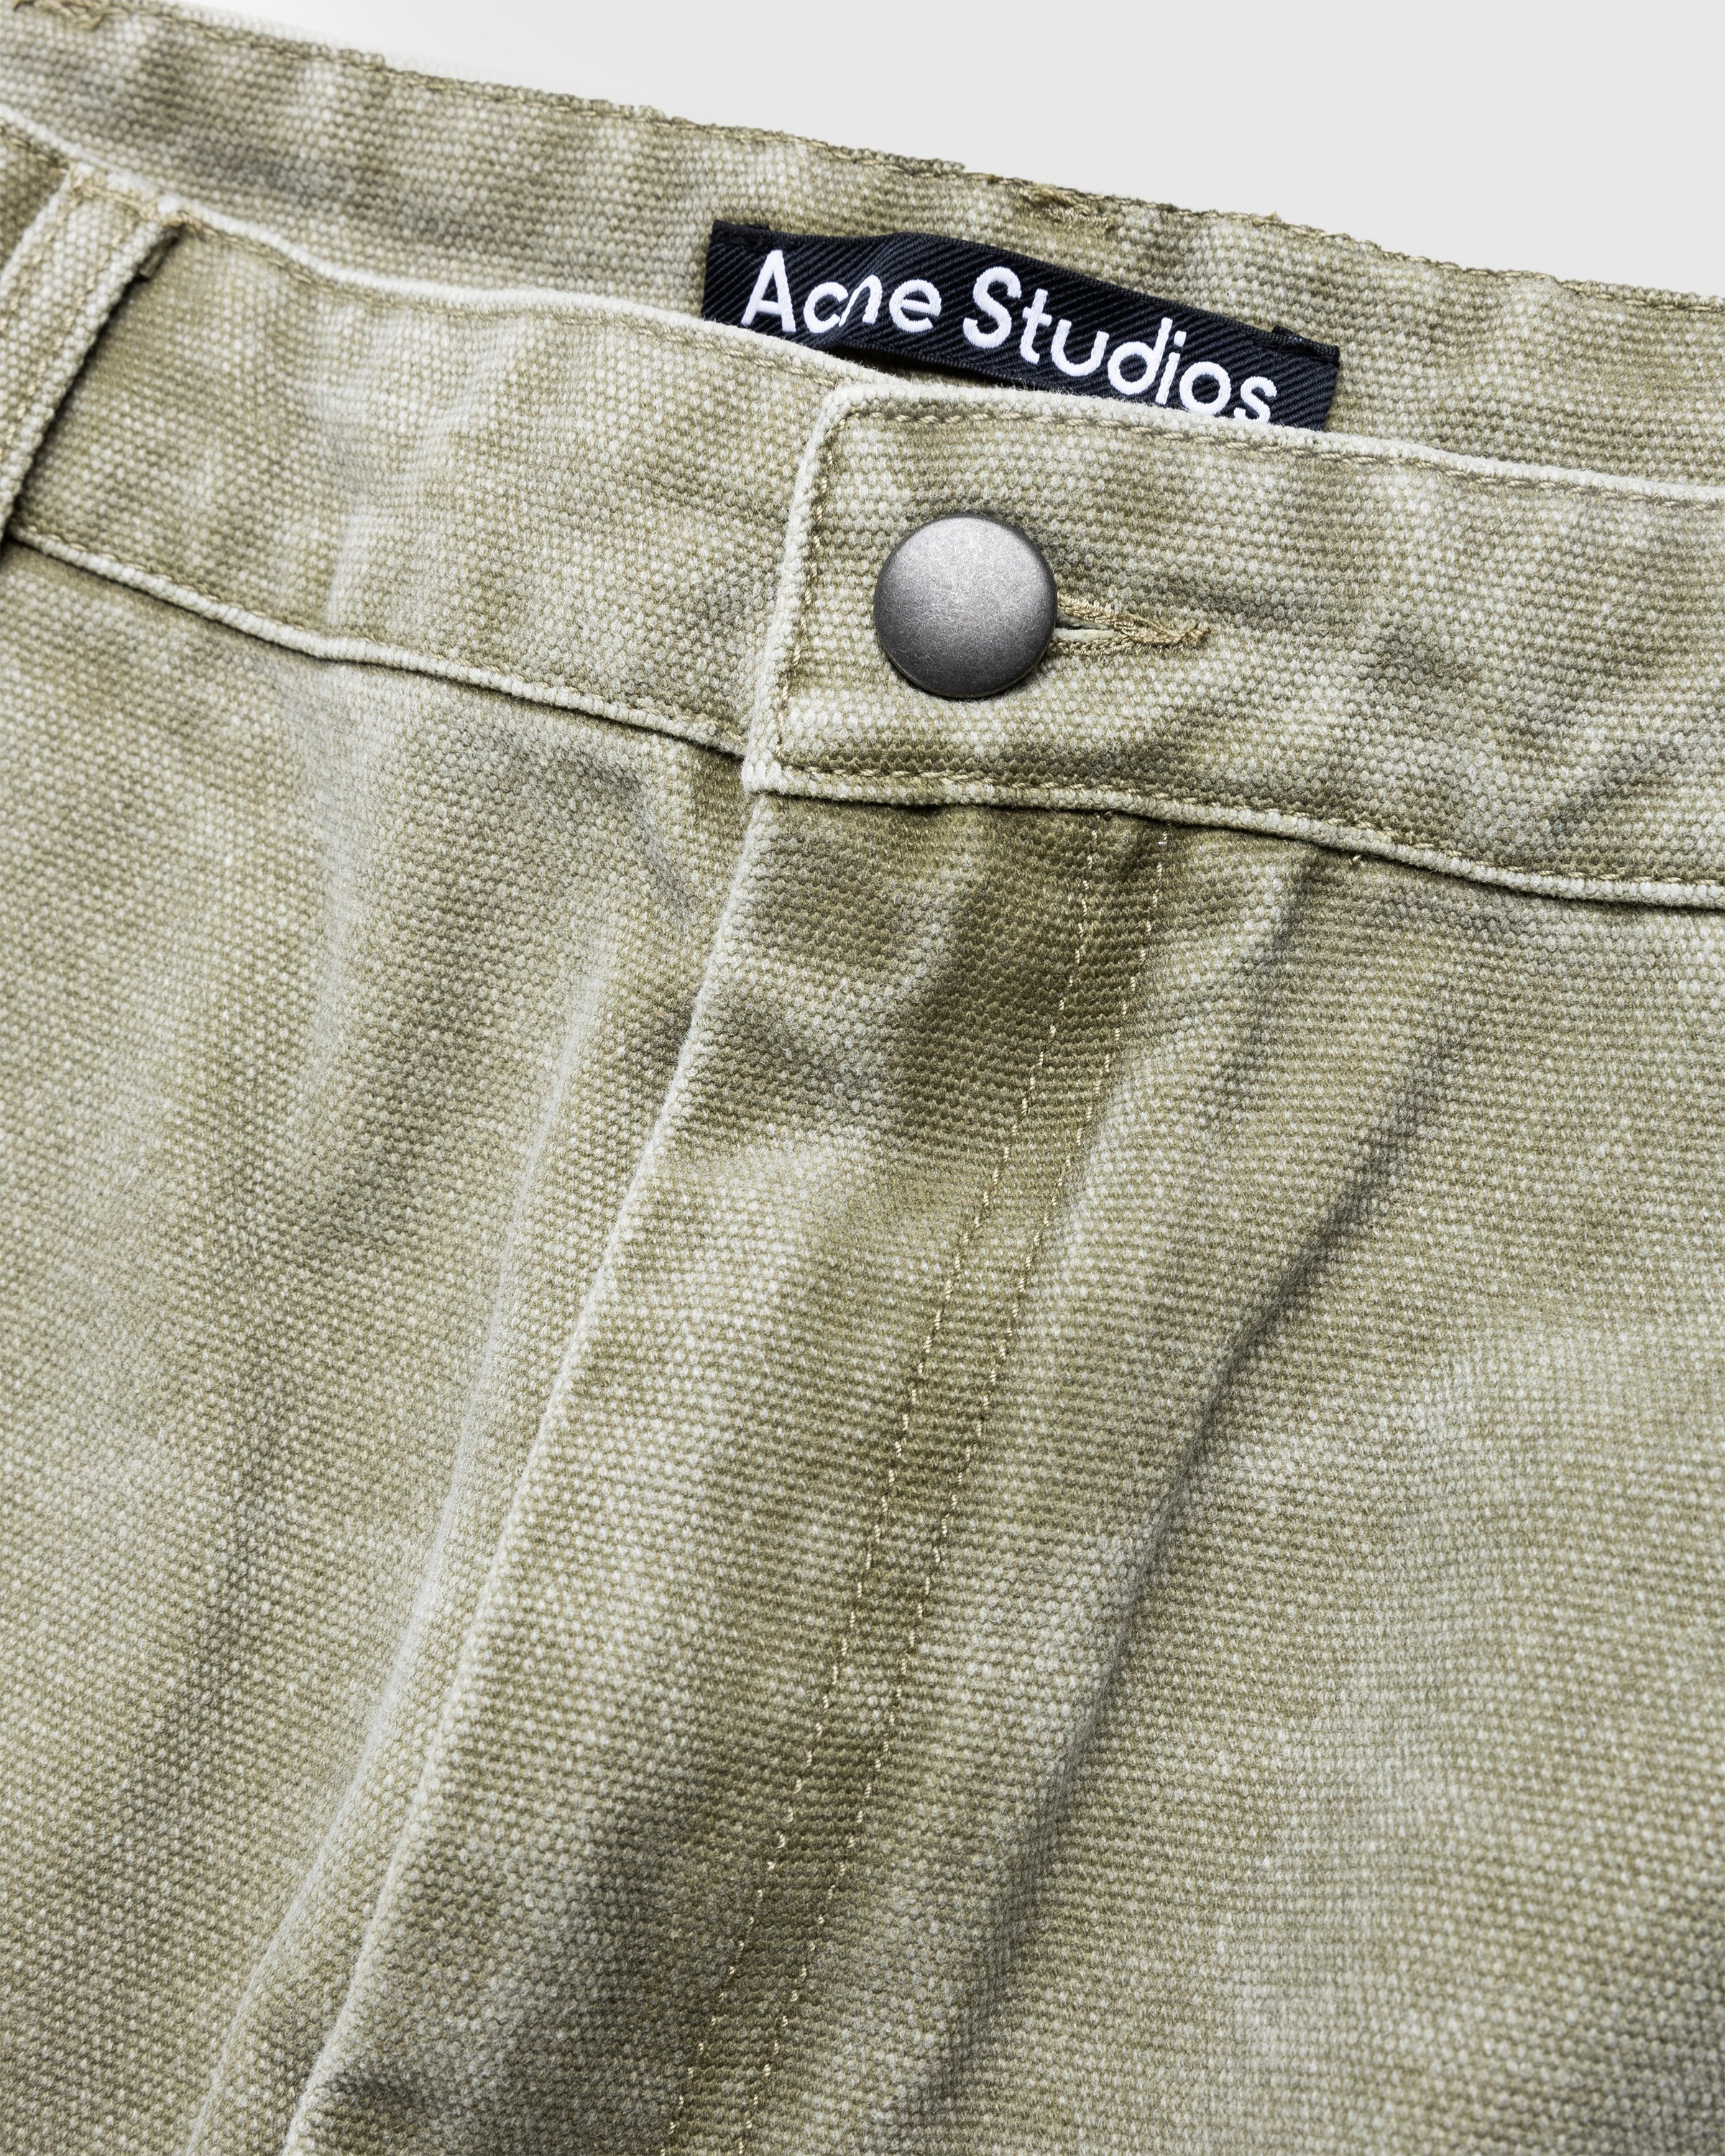 Acne Studios - Cotton Canvas Trousers Khaki Beige - Clothing - Green - Image 5